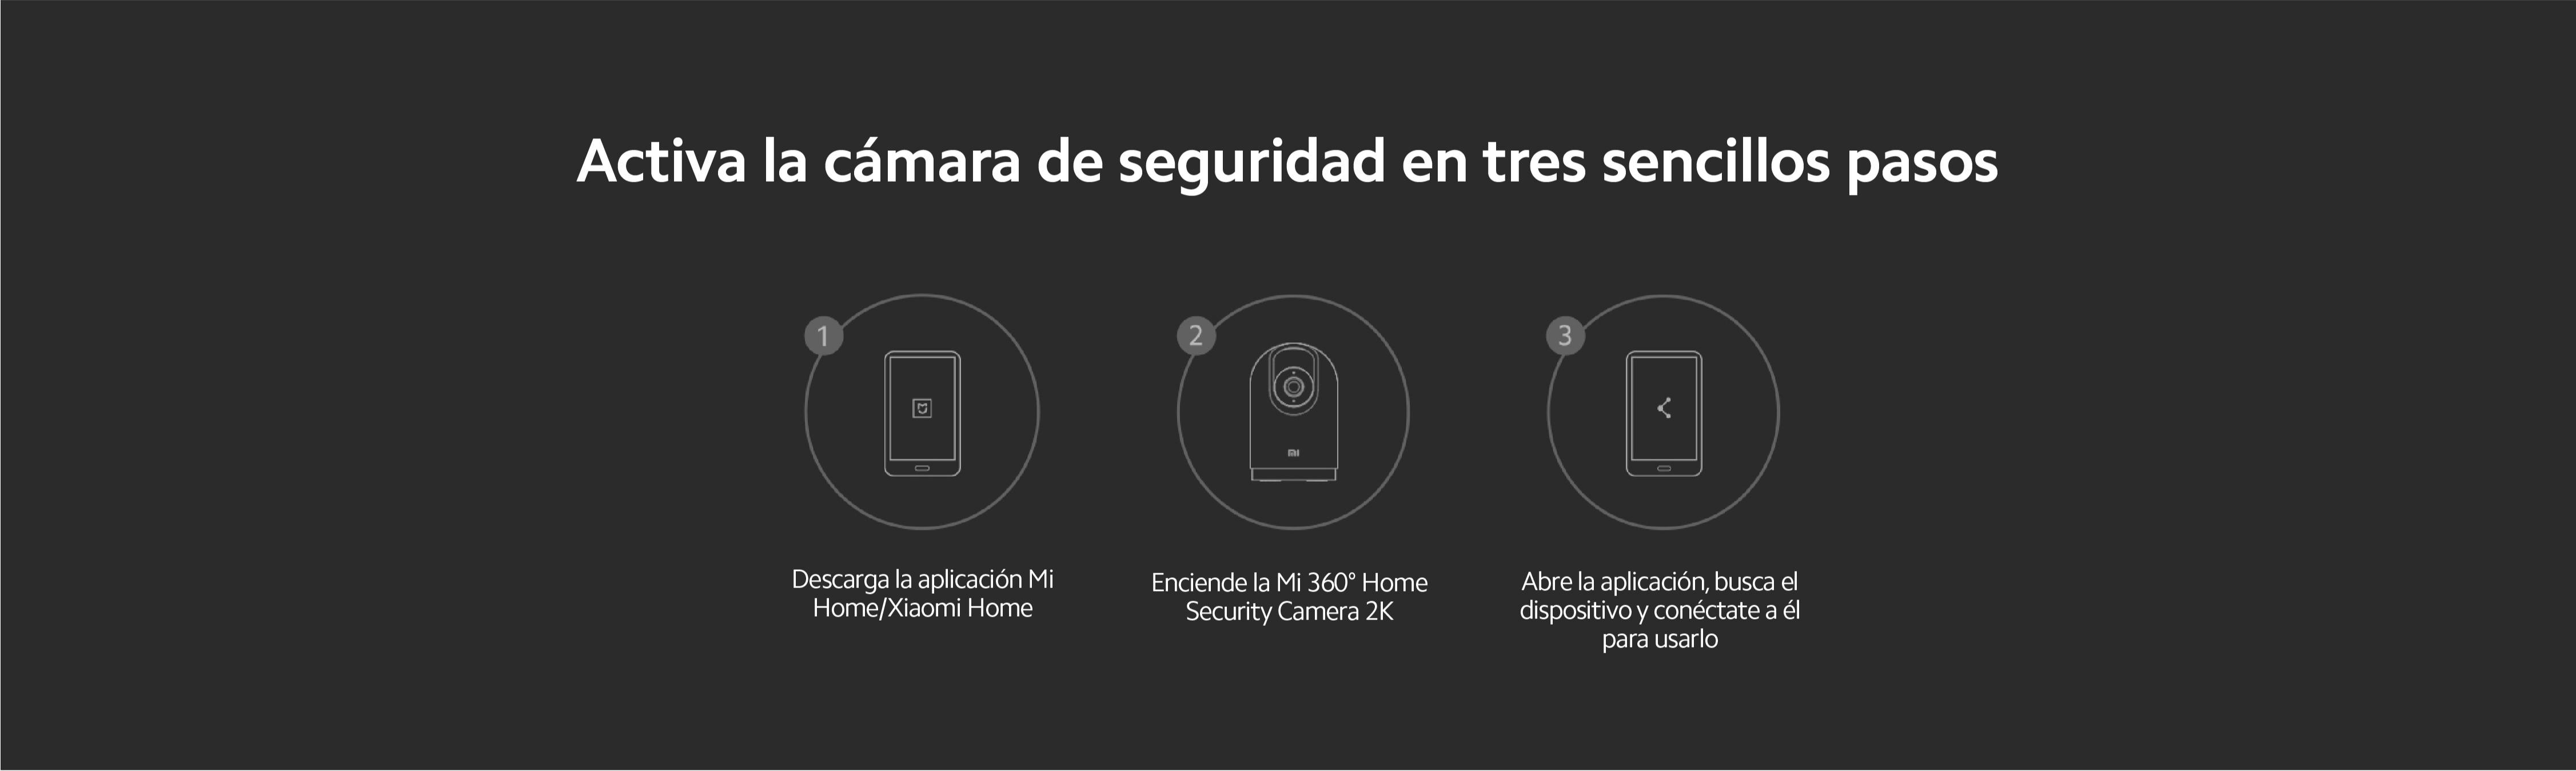 Cámara de vigilancia MJSXJ09CM Mi Home 360 2K Xiaomi - La Victoria - Ecuador